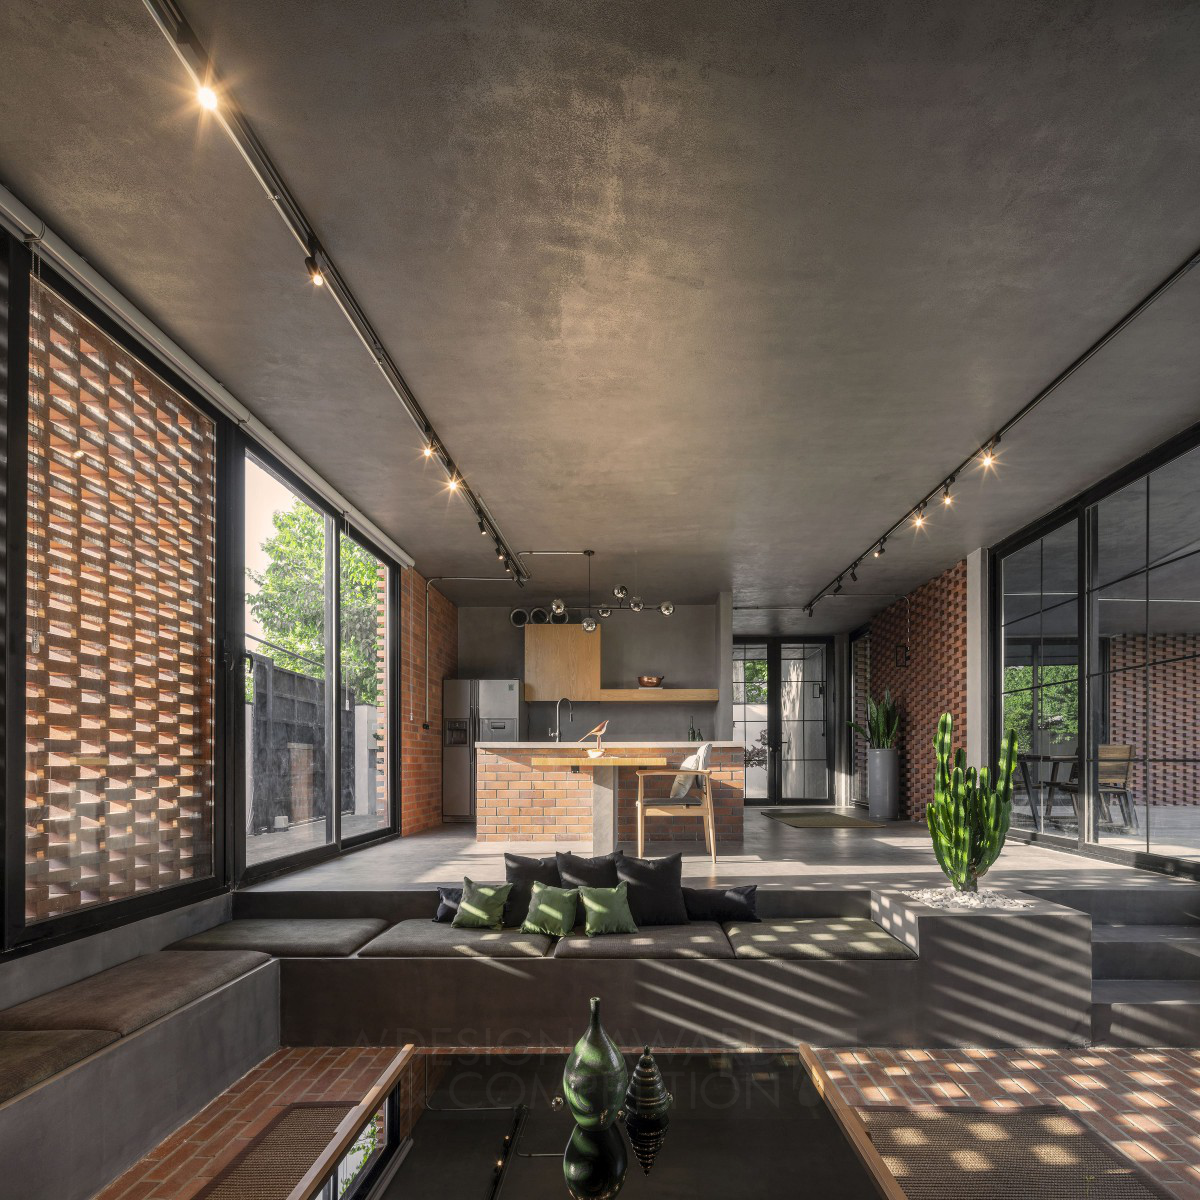 Arash Madani wins Silver at the prestigious A' Interior Space, Retail and Exhibition Design Award with Corner Villa Residential.